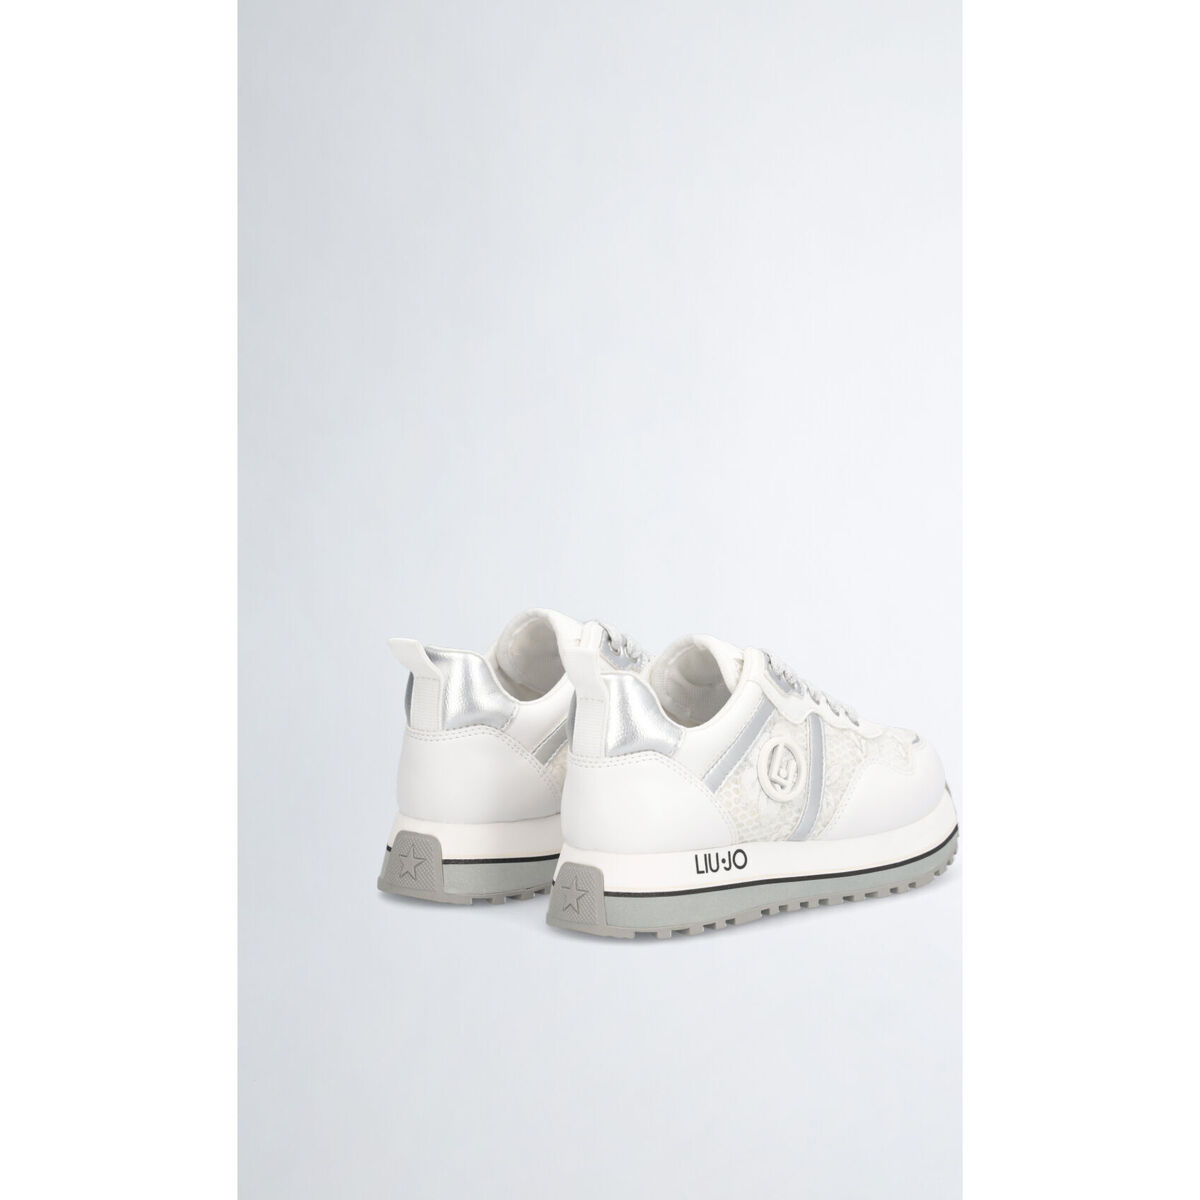 Liu Jo Blanc Sneakers plateforme avec dentelle qOYcpcfC